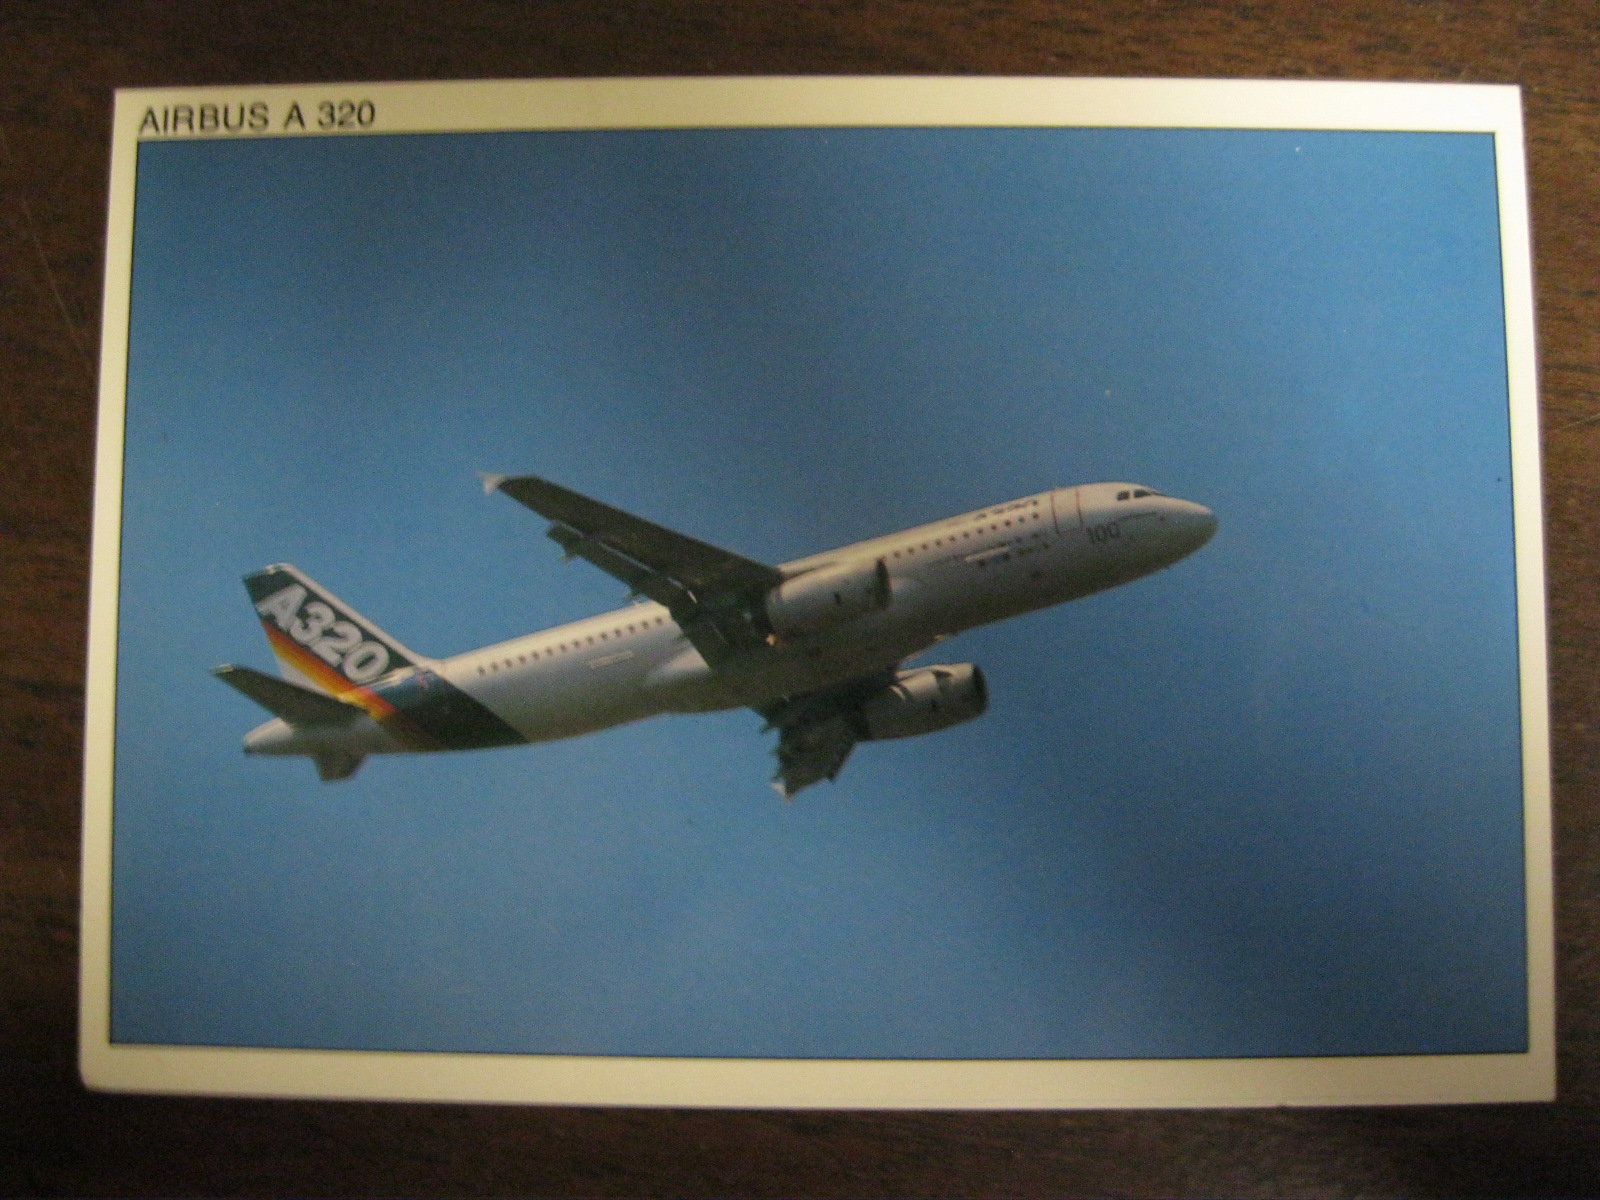 Airbus A320 post card